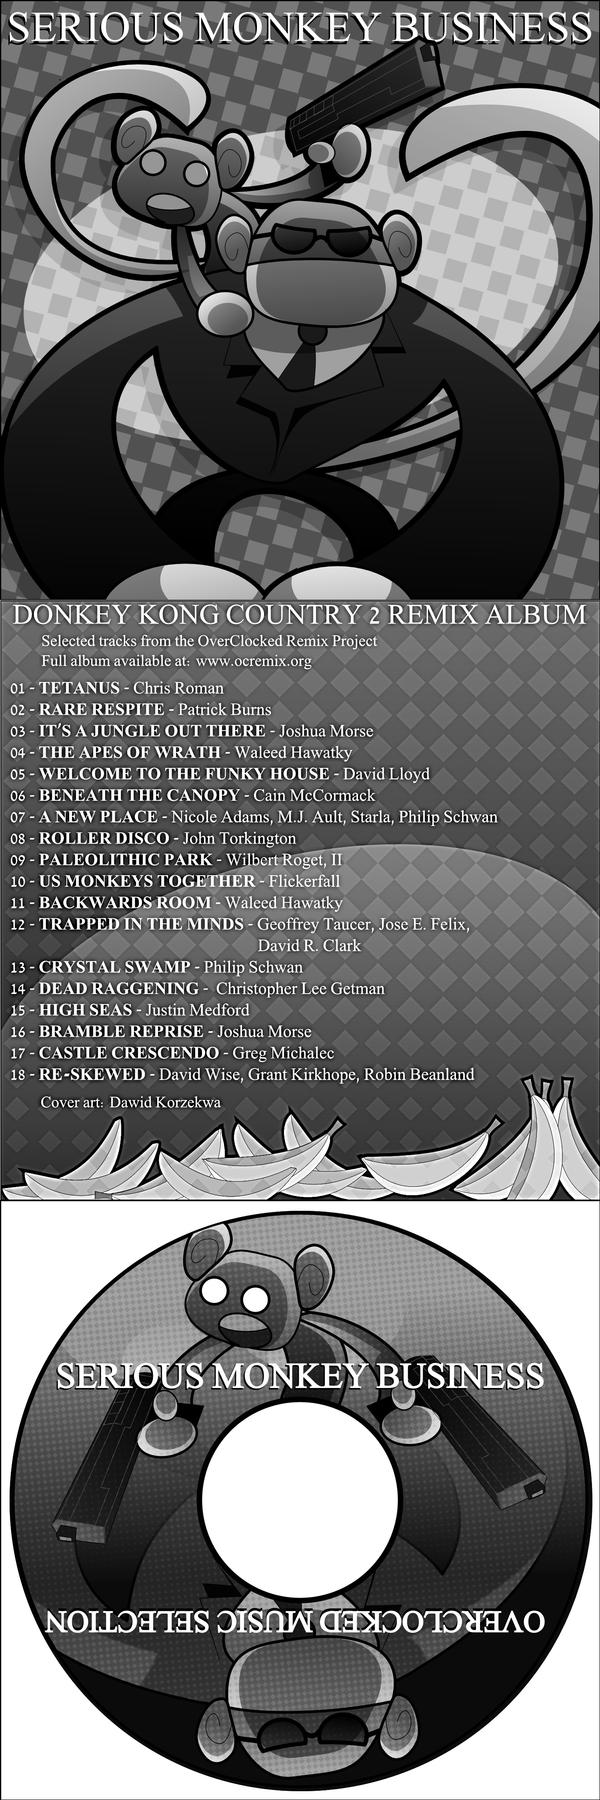 Donkey Kong music album